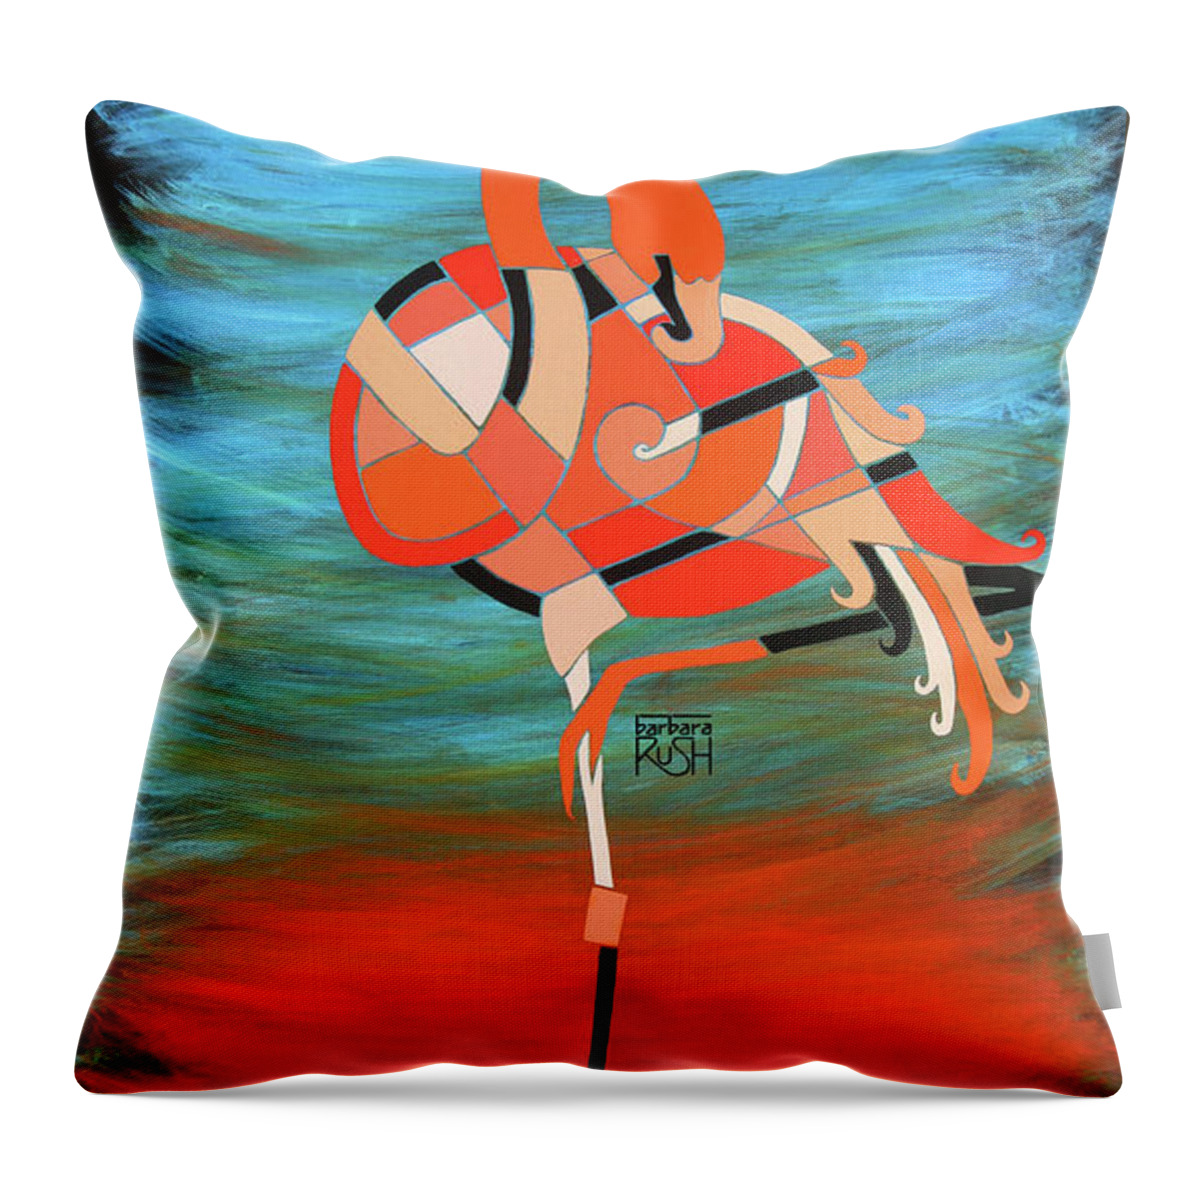 Flamingo Art Throw Pillow featuring the painting An Elegant Flamingo by Barbara Rush